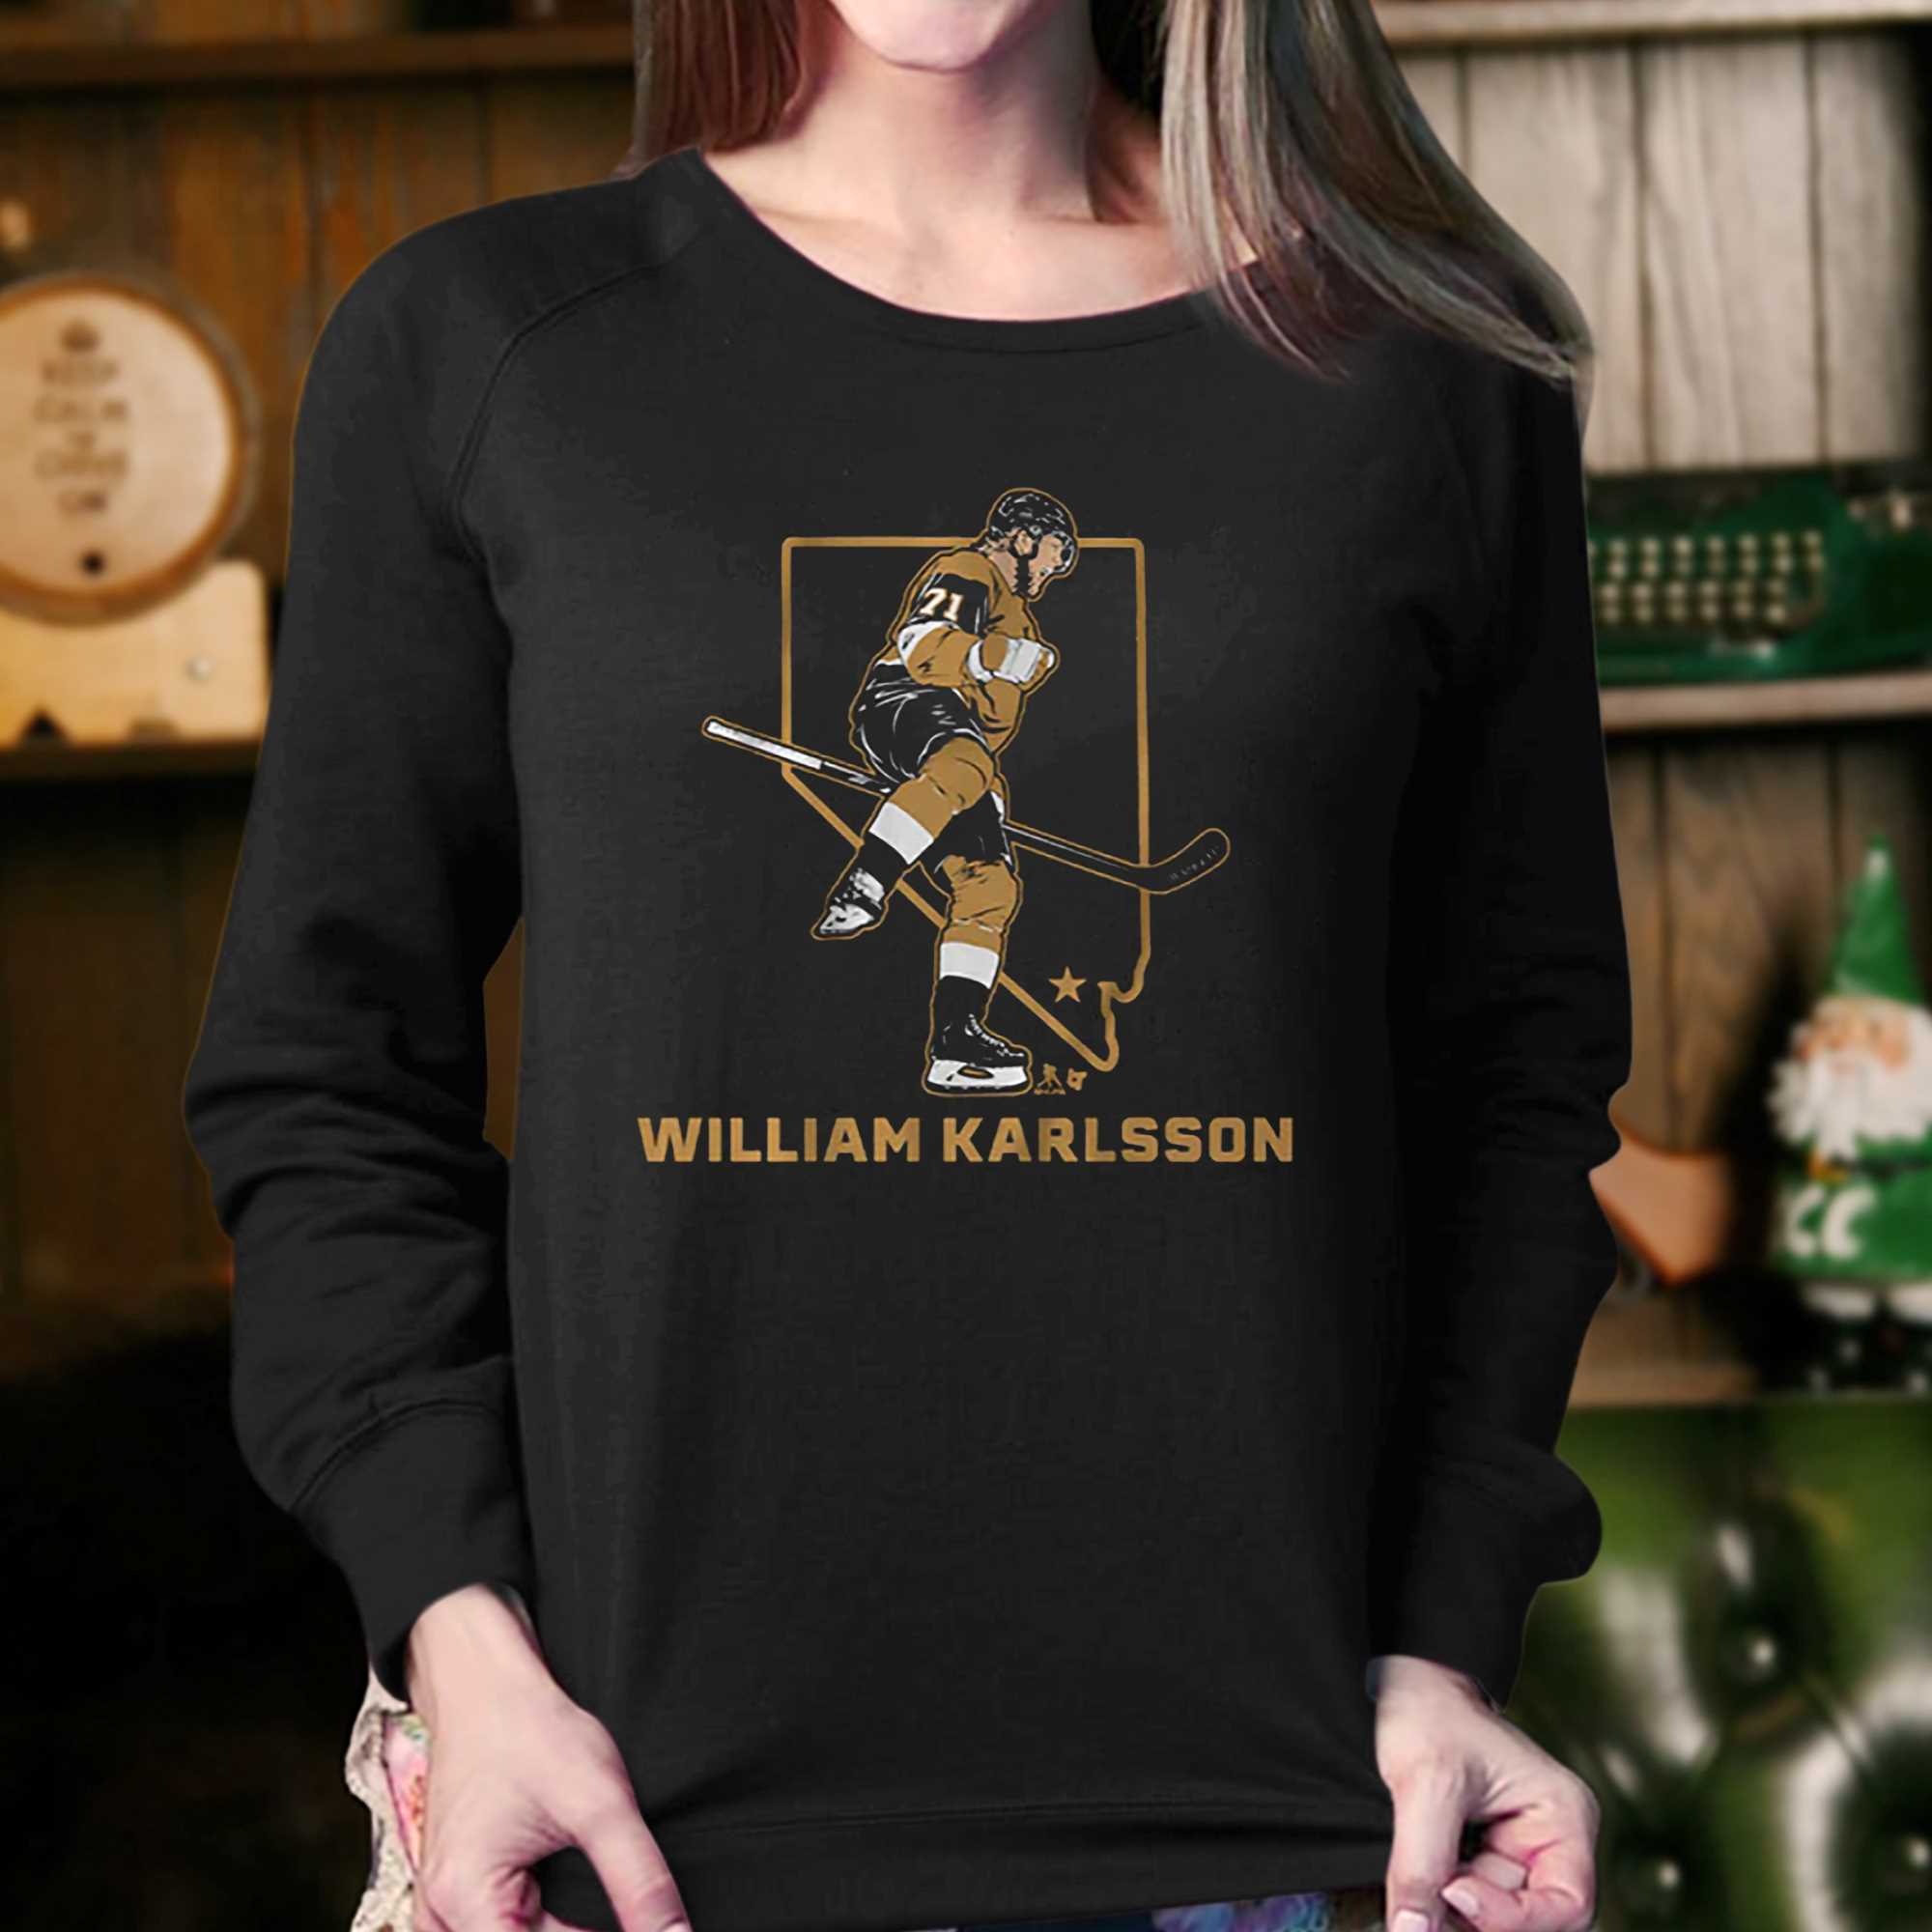 William Karlsson Jerseys, Apparel, Clothing